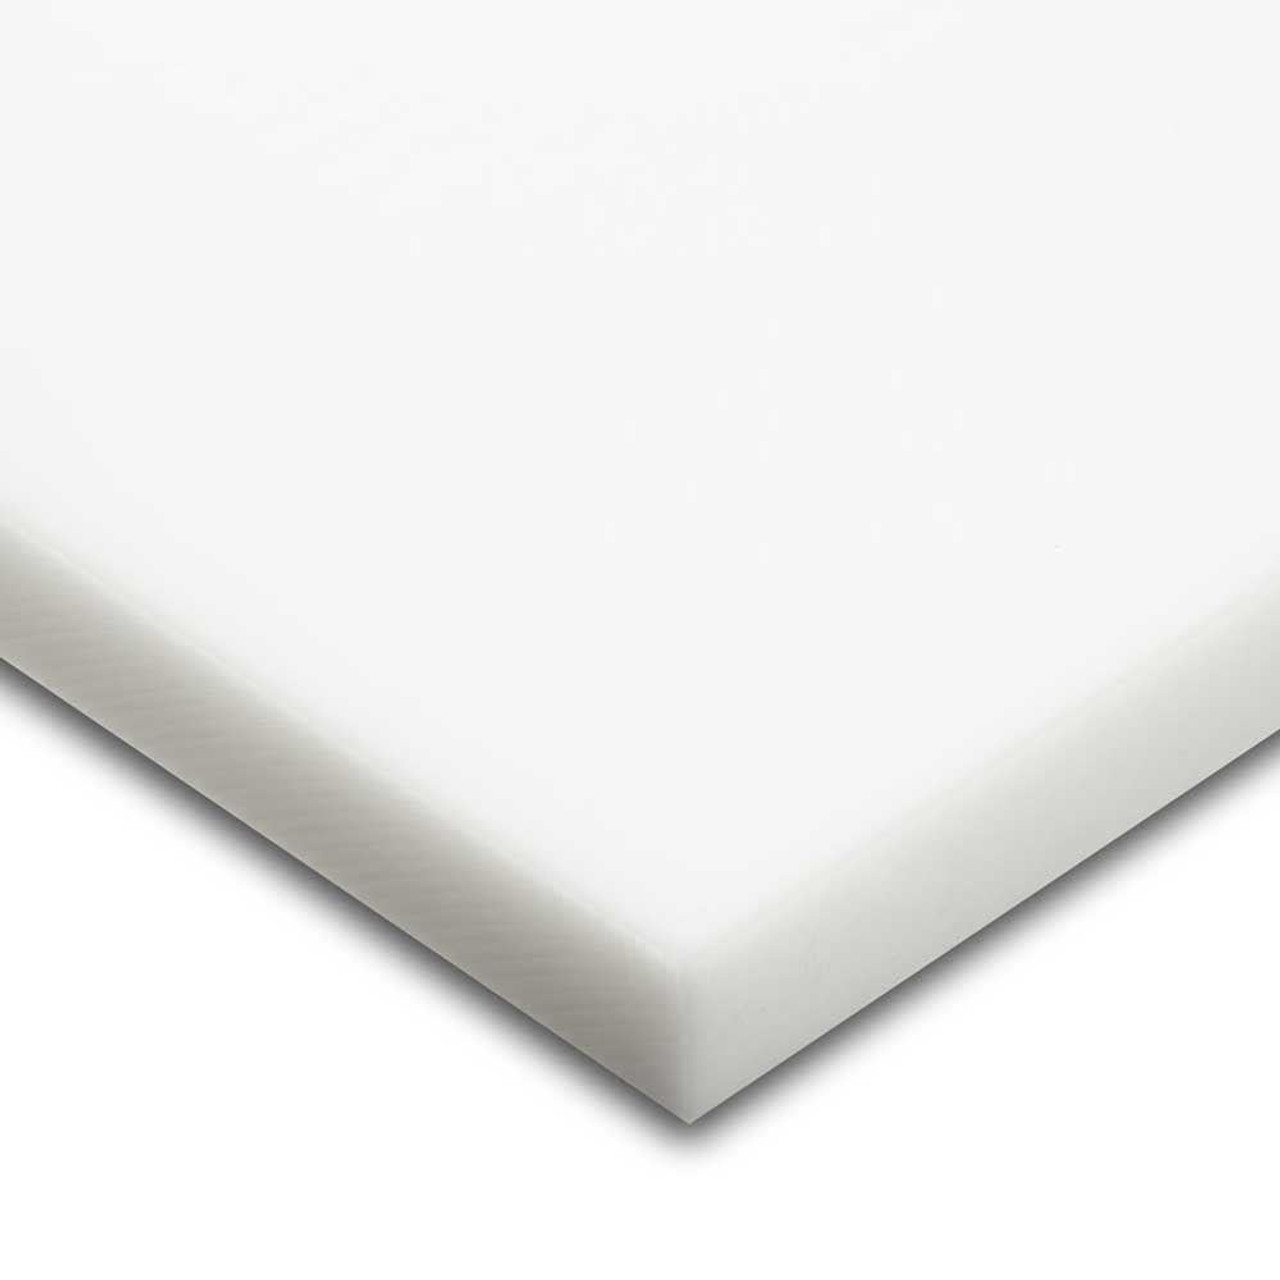 2" x 4" x 16", Acetal Plastic Sheet, White